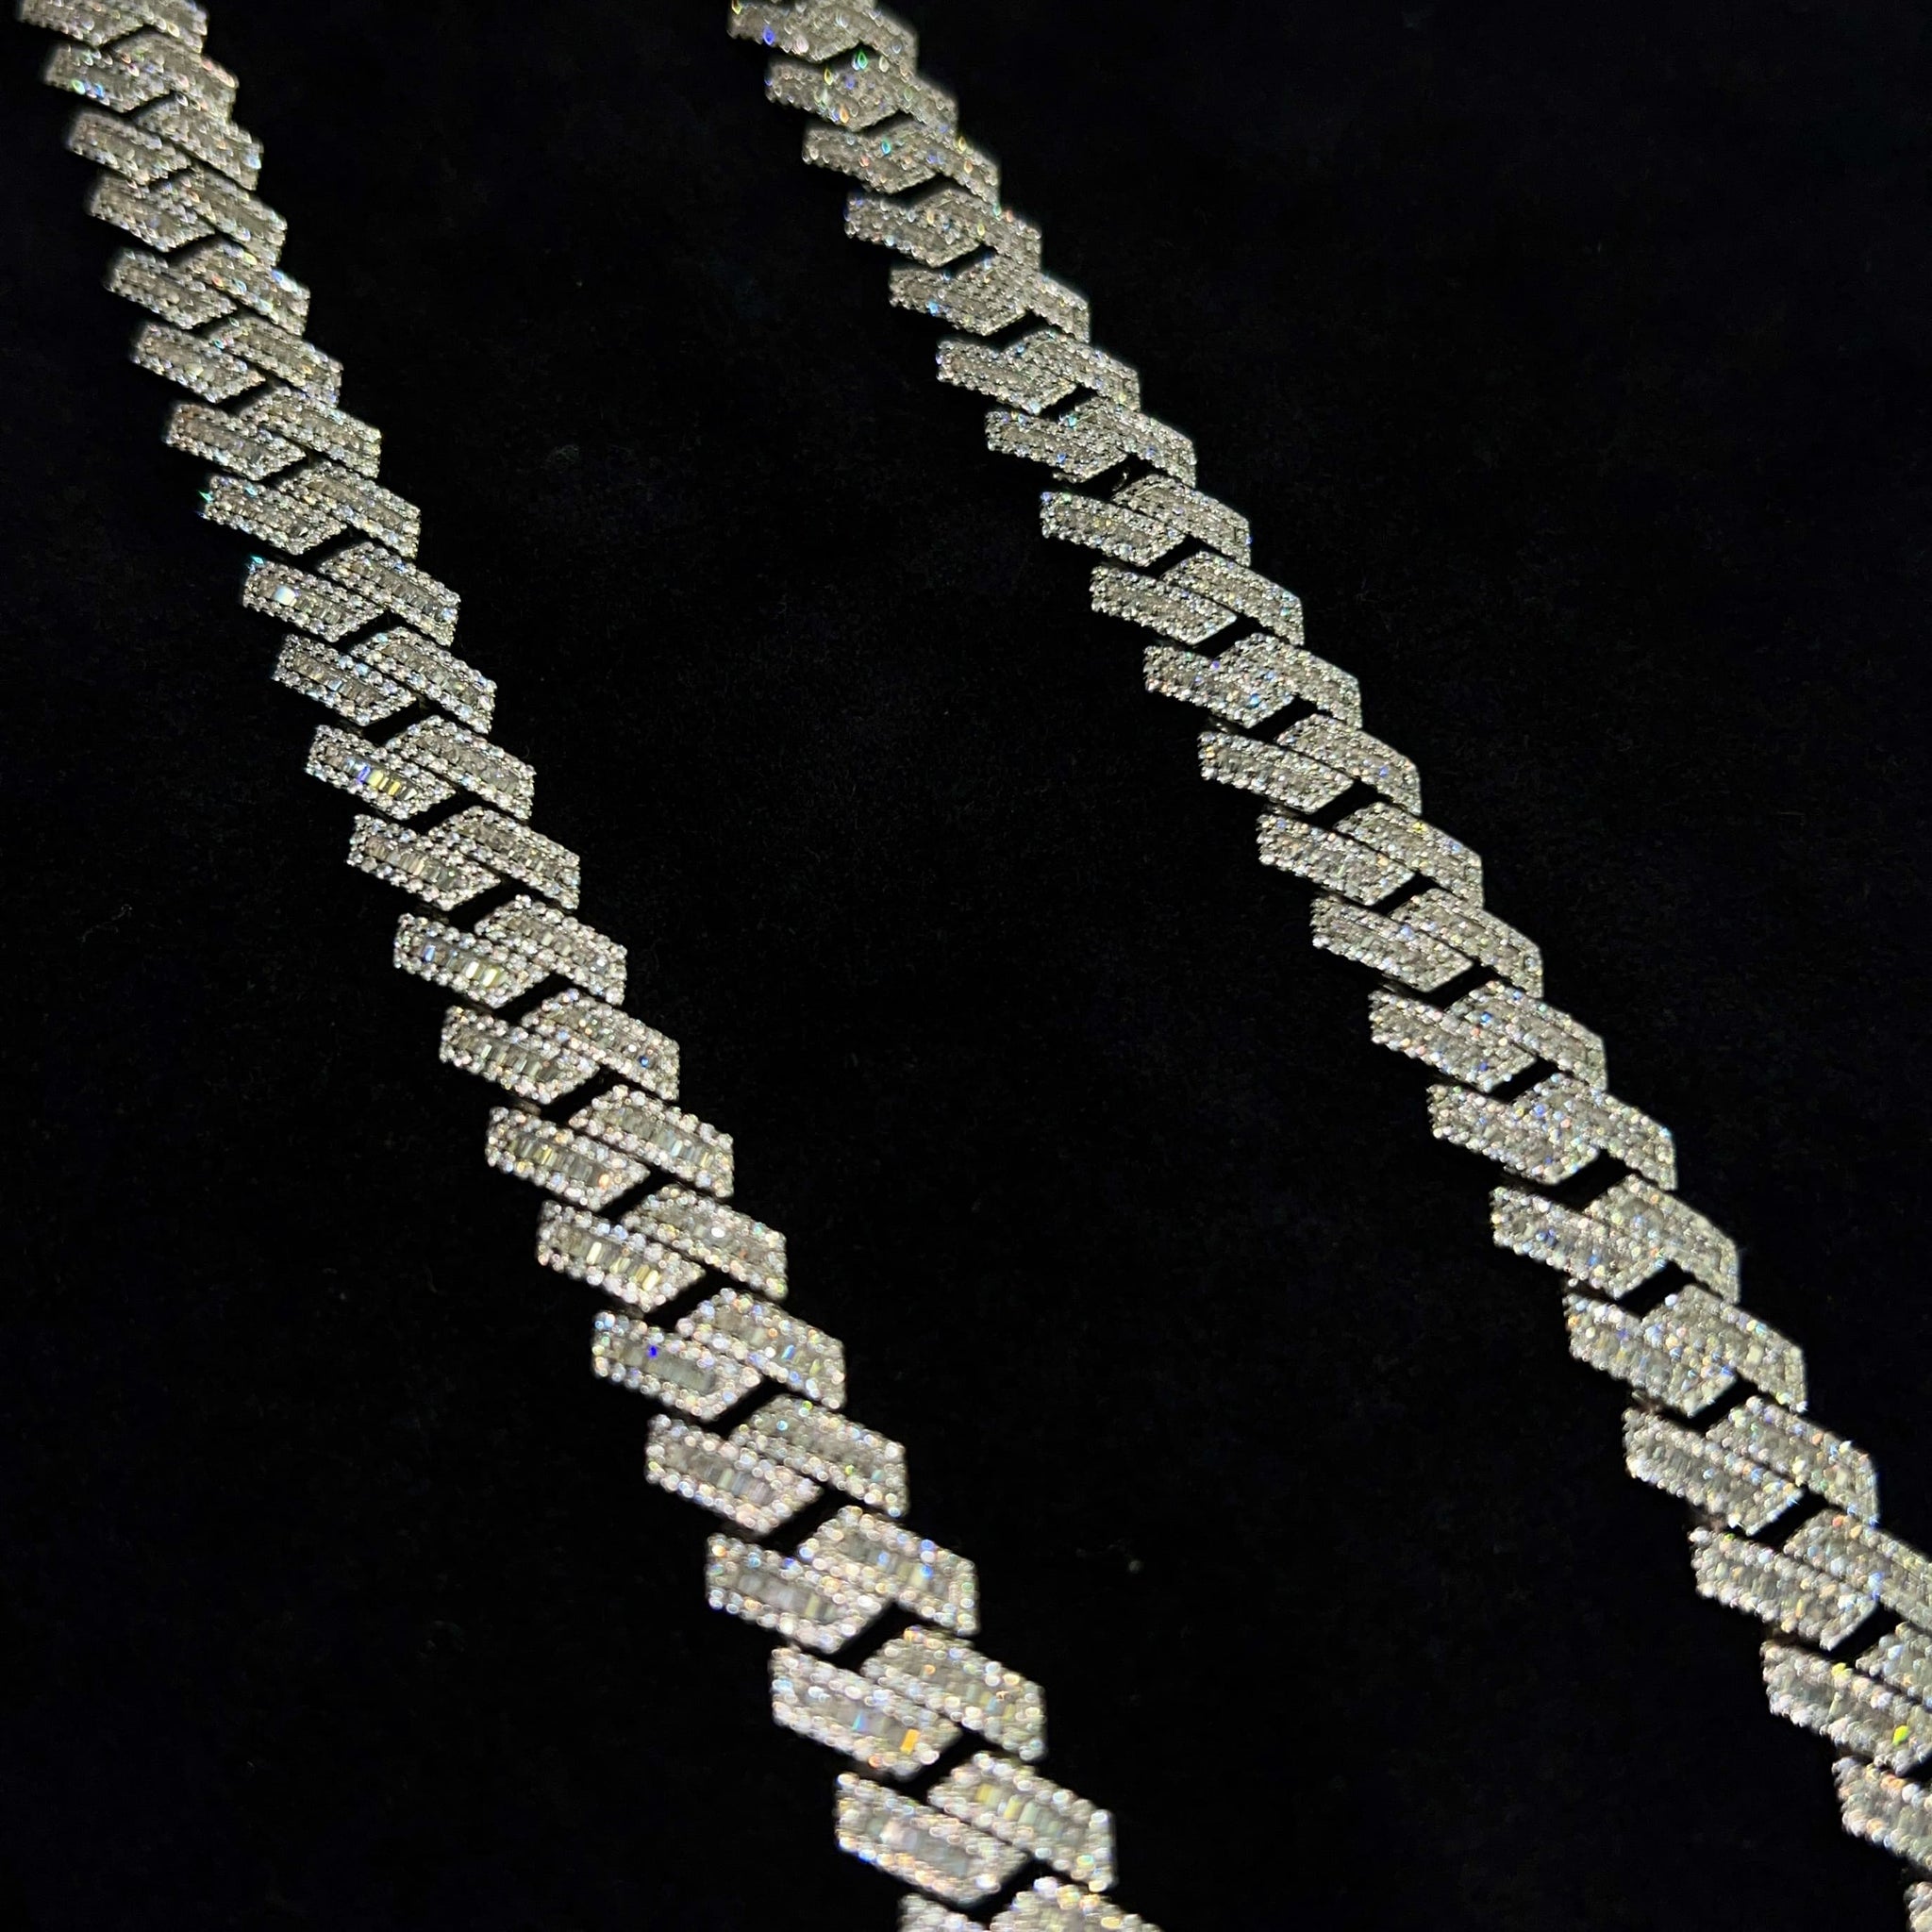 Cuban Link Chain - Silver 925 - 60cm / 12mm - 294